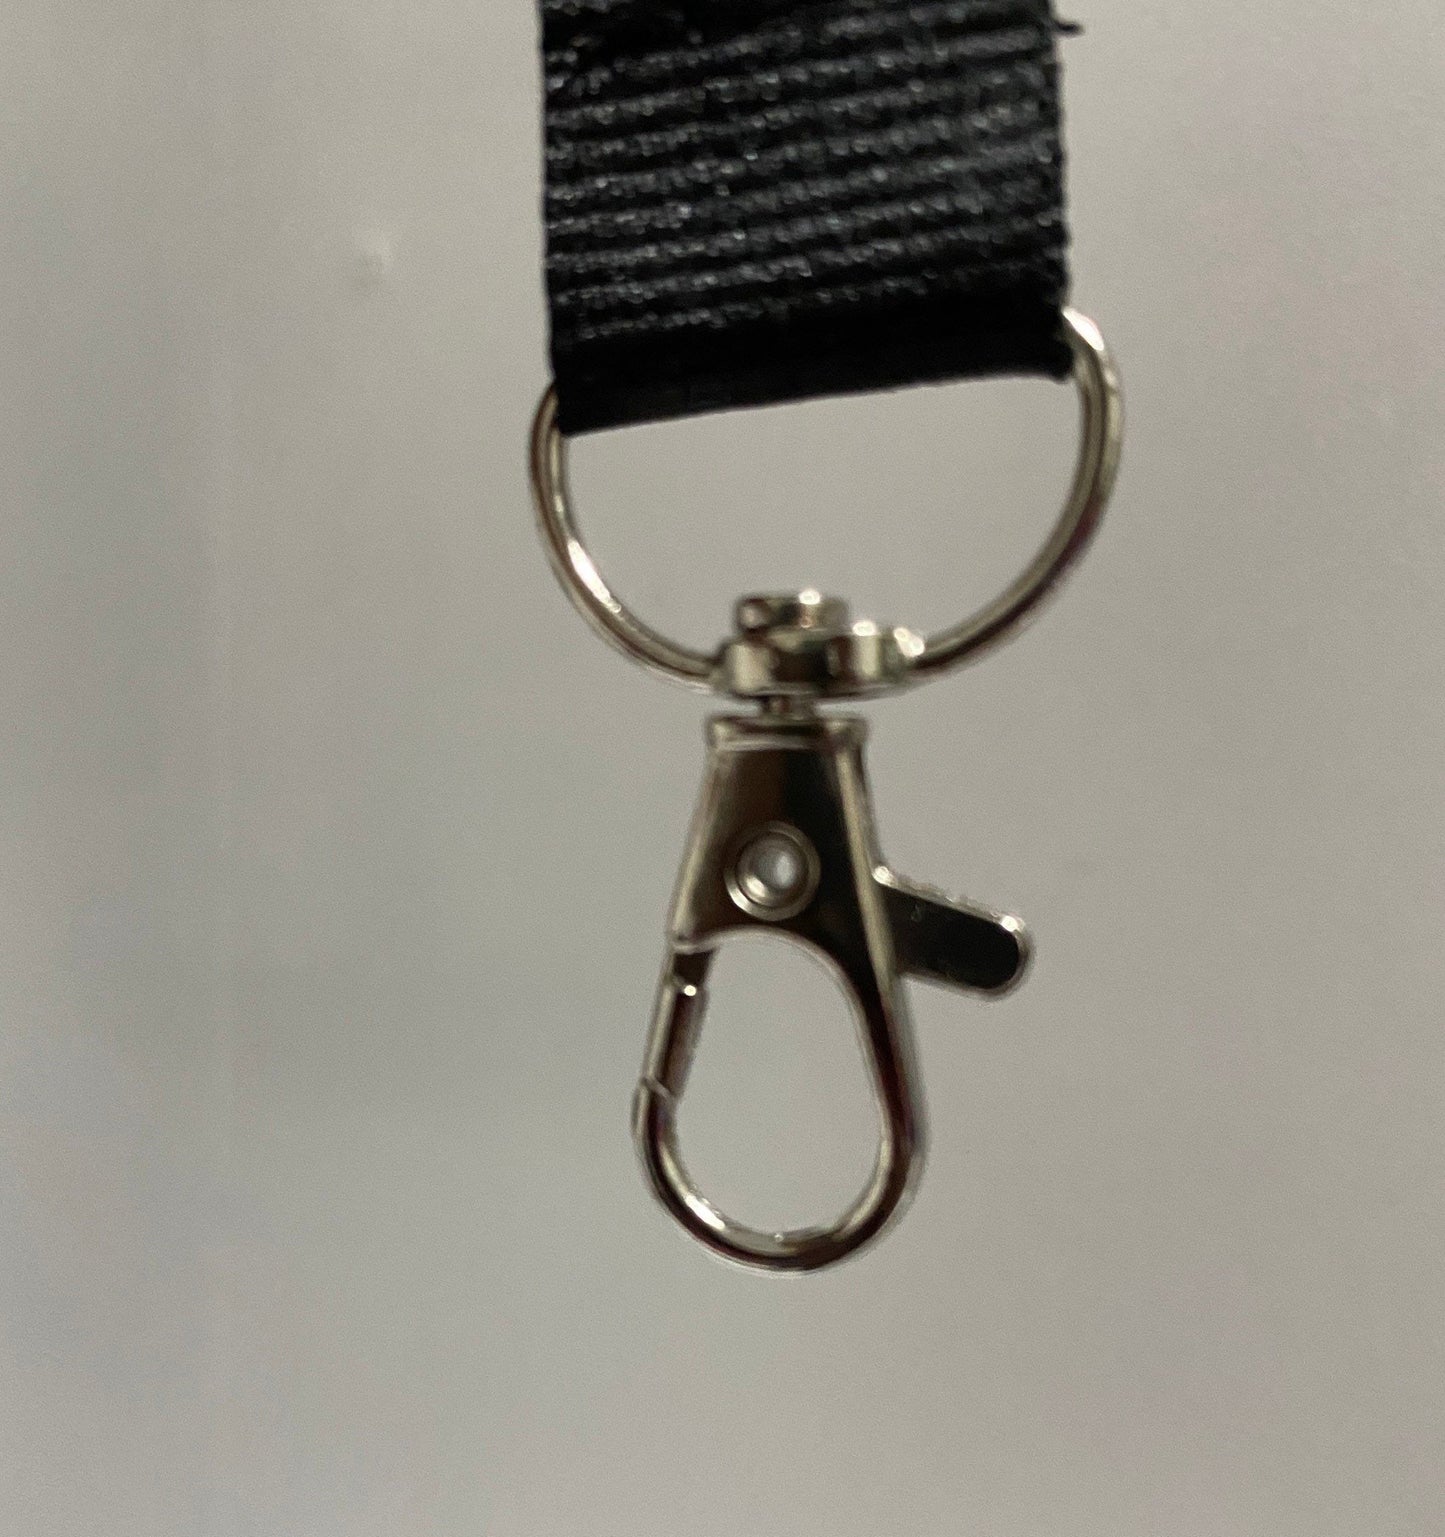 UNDERGRAD NURSE LANYARD, Badge holder/key holder with 2 breakaways, Student Nurse Gift